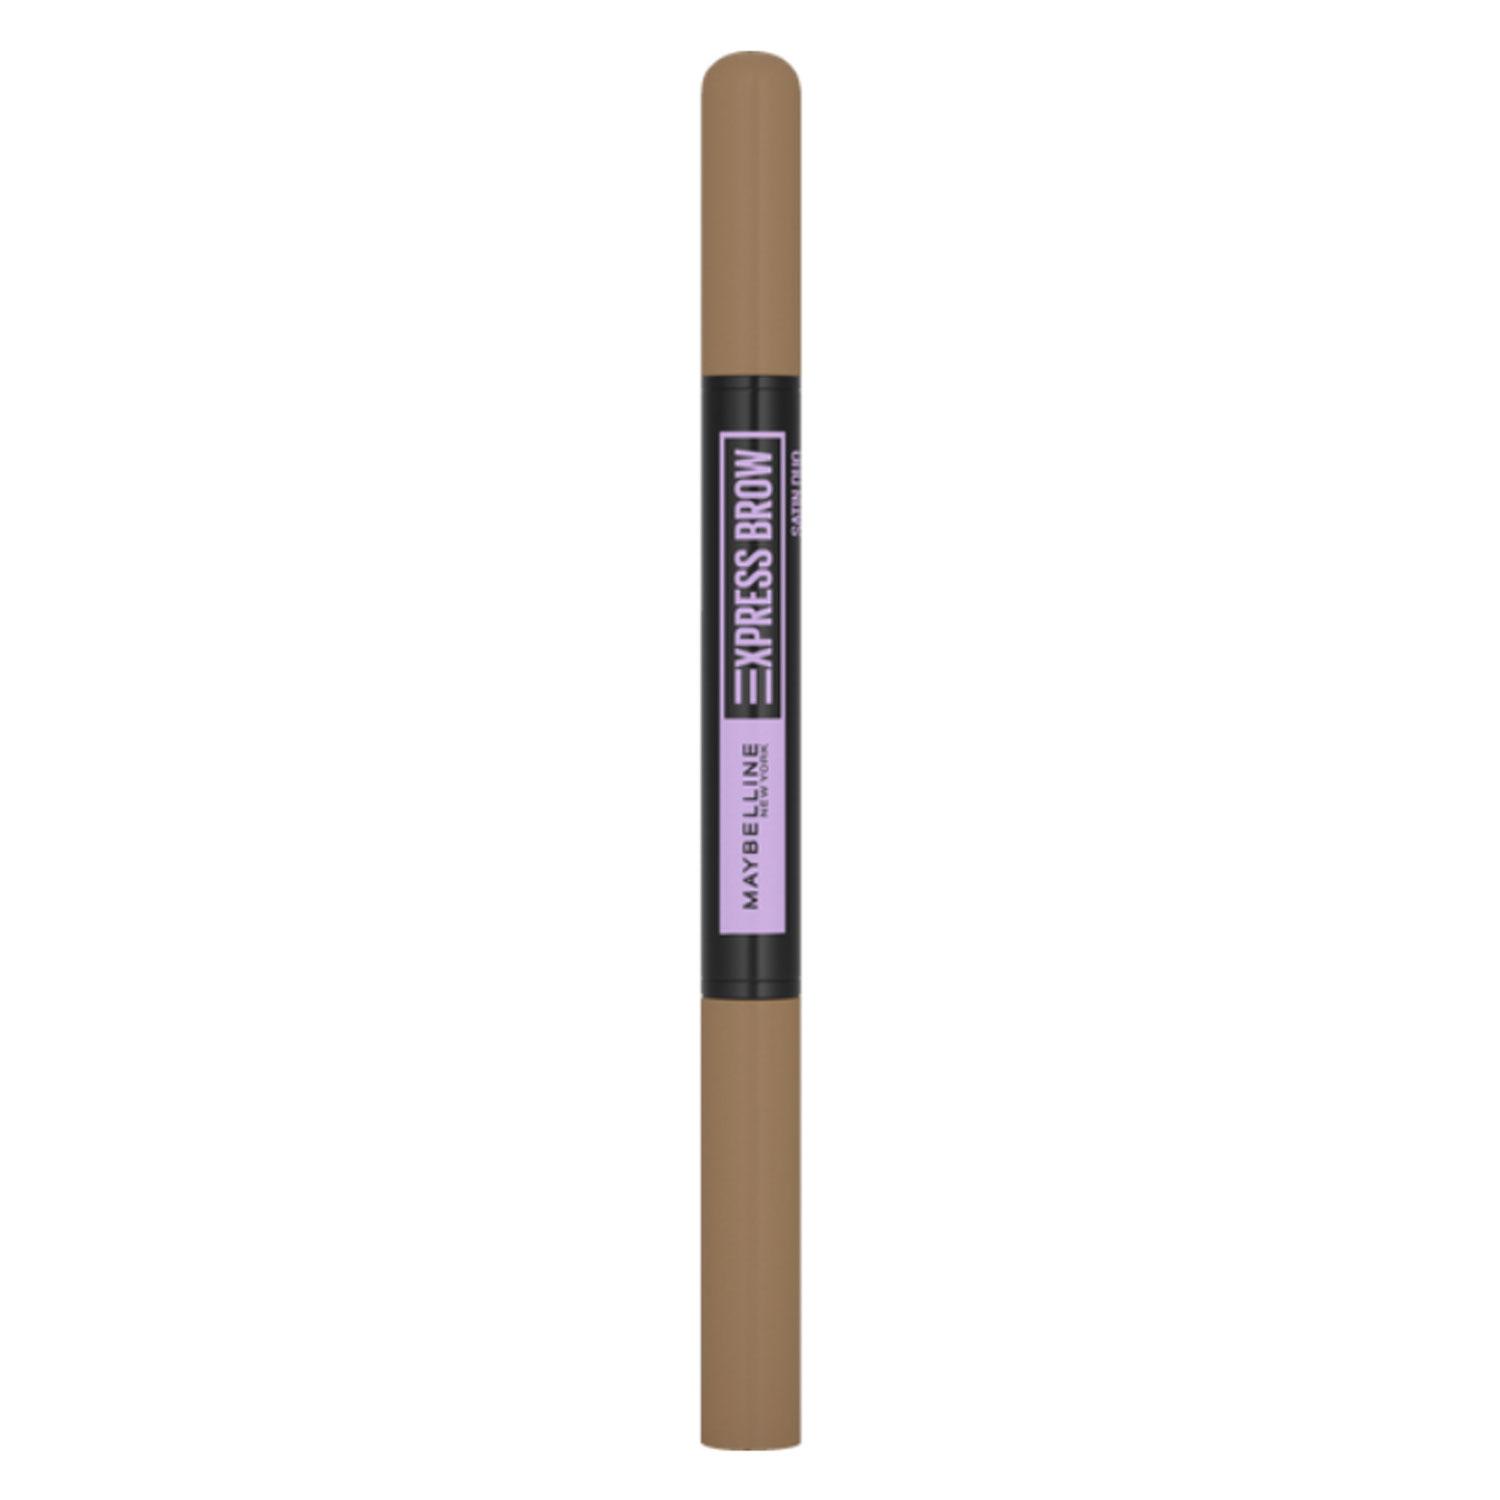 Maybelline NY Brows - Express Brow Satin Duo Eyebrow Pencil and Powder No. 01 Dark Blonde